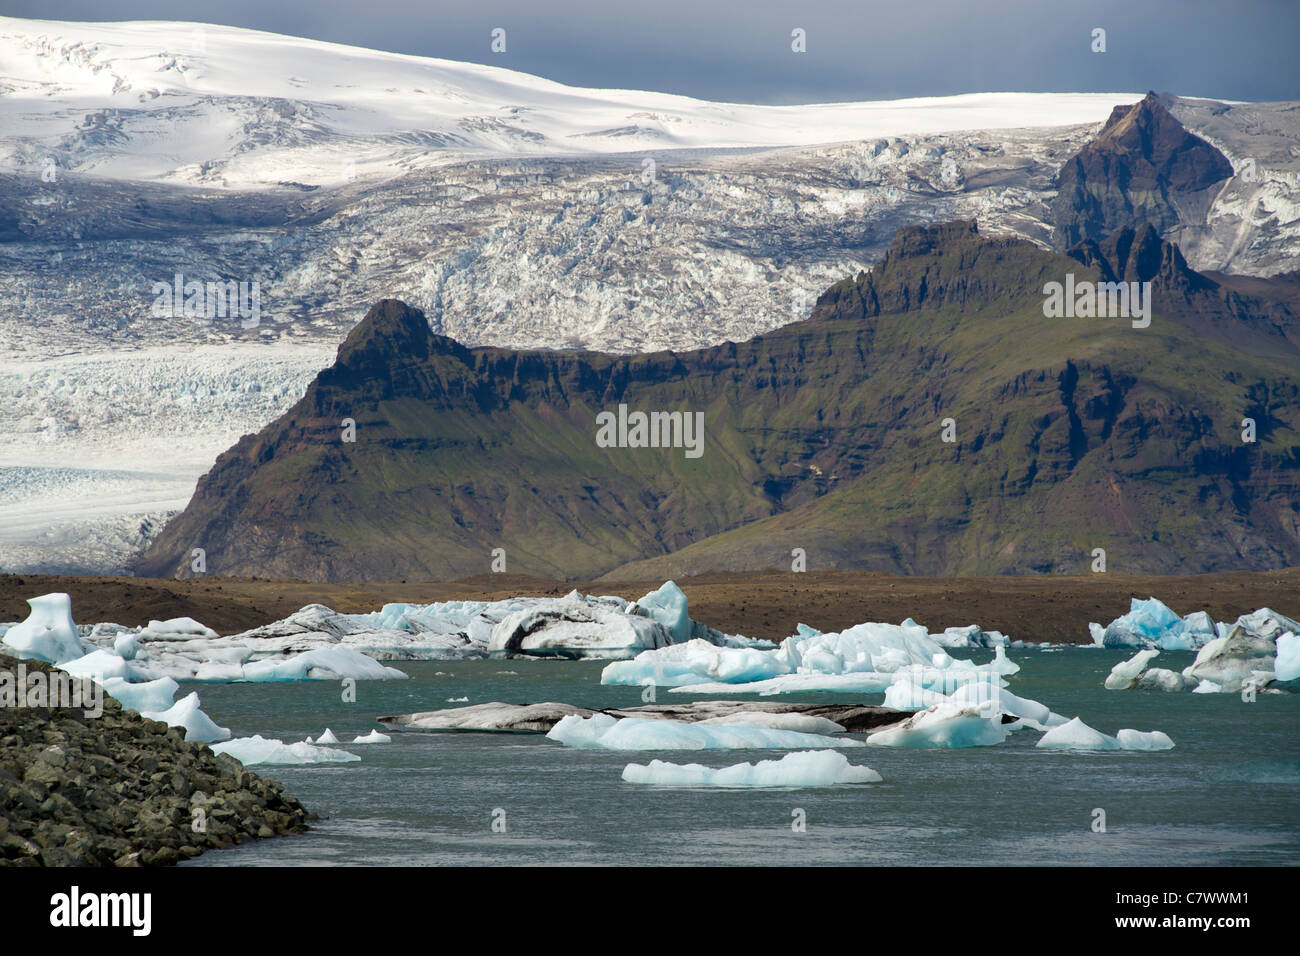 Icebergs floating in the Jokullsarlon lake at the foot of the massive Vatnajokull glacier in southeast Iceland. Stock Photo